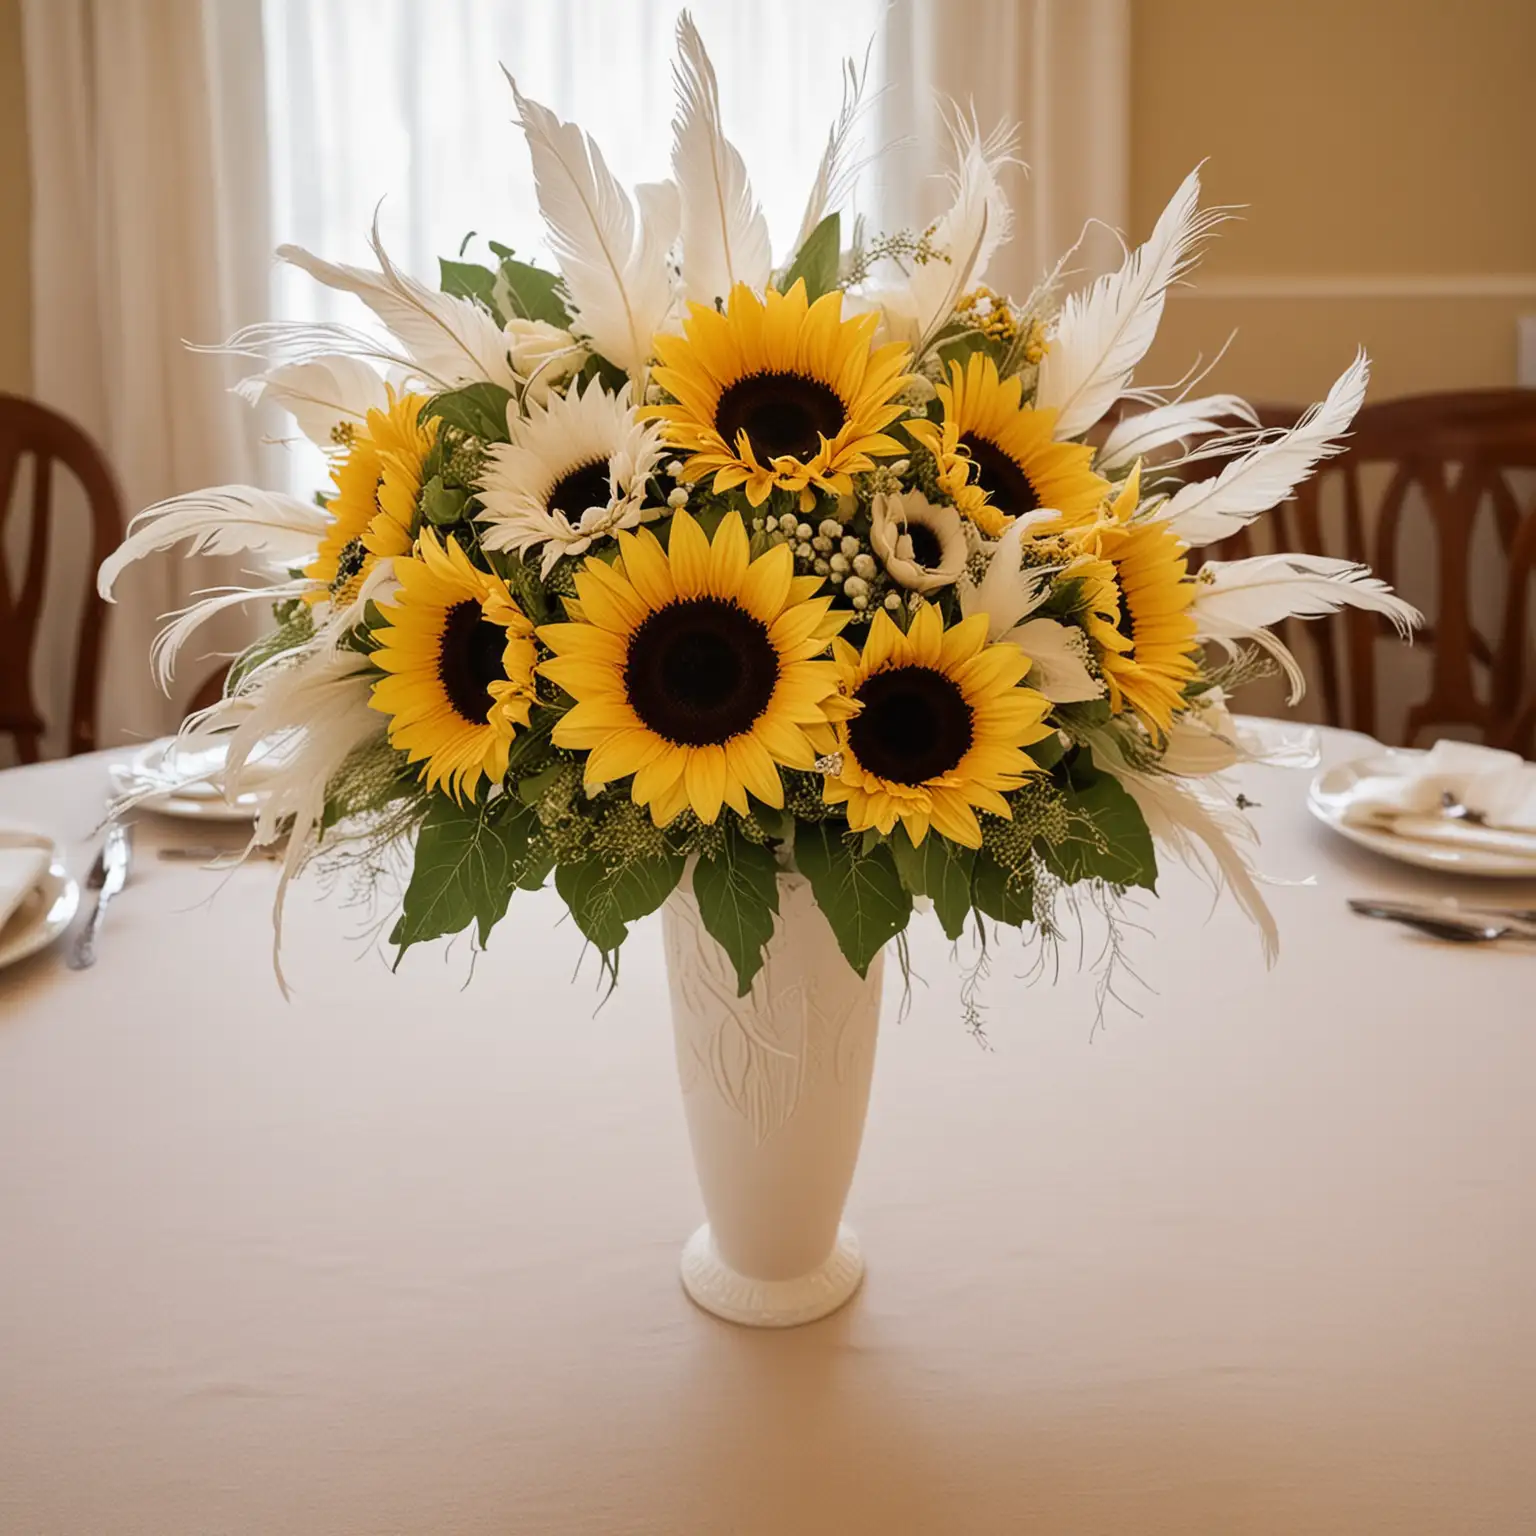 Elegant-Wedding-Centerpiece-Sunflowers-and-Ivory-Feathers-in-Matching-Vase